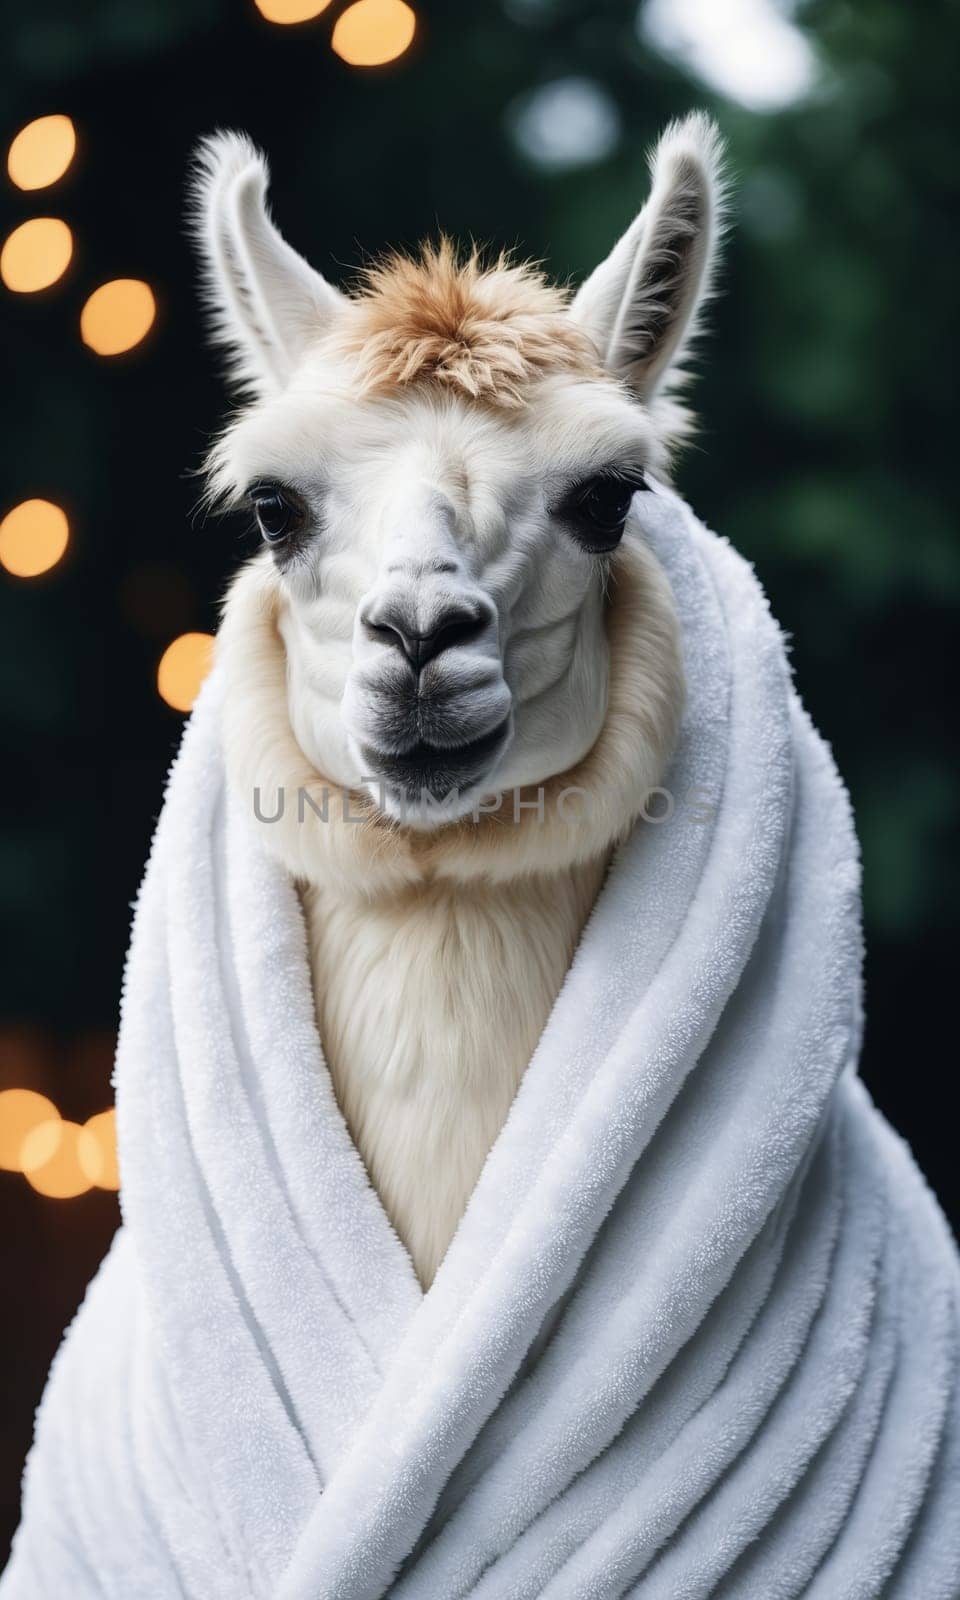 Portrait of a white alpaca wearing a white bathrobe in the mountains.